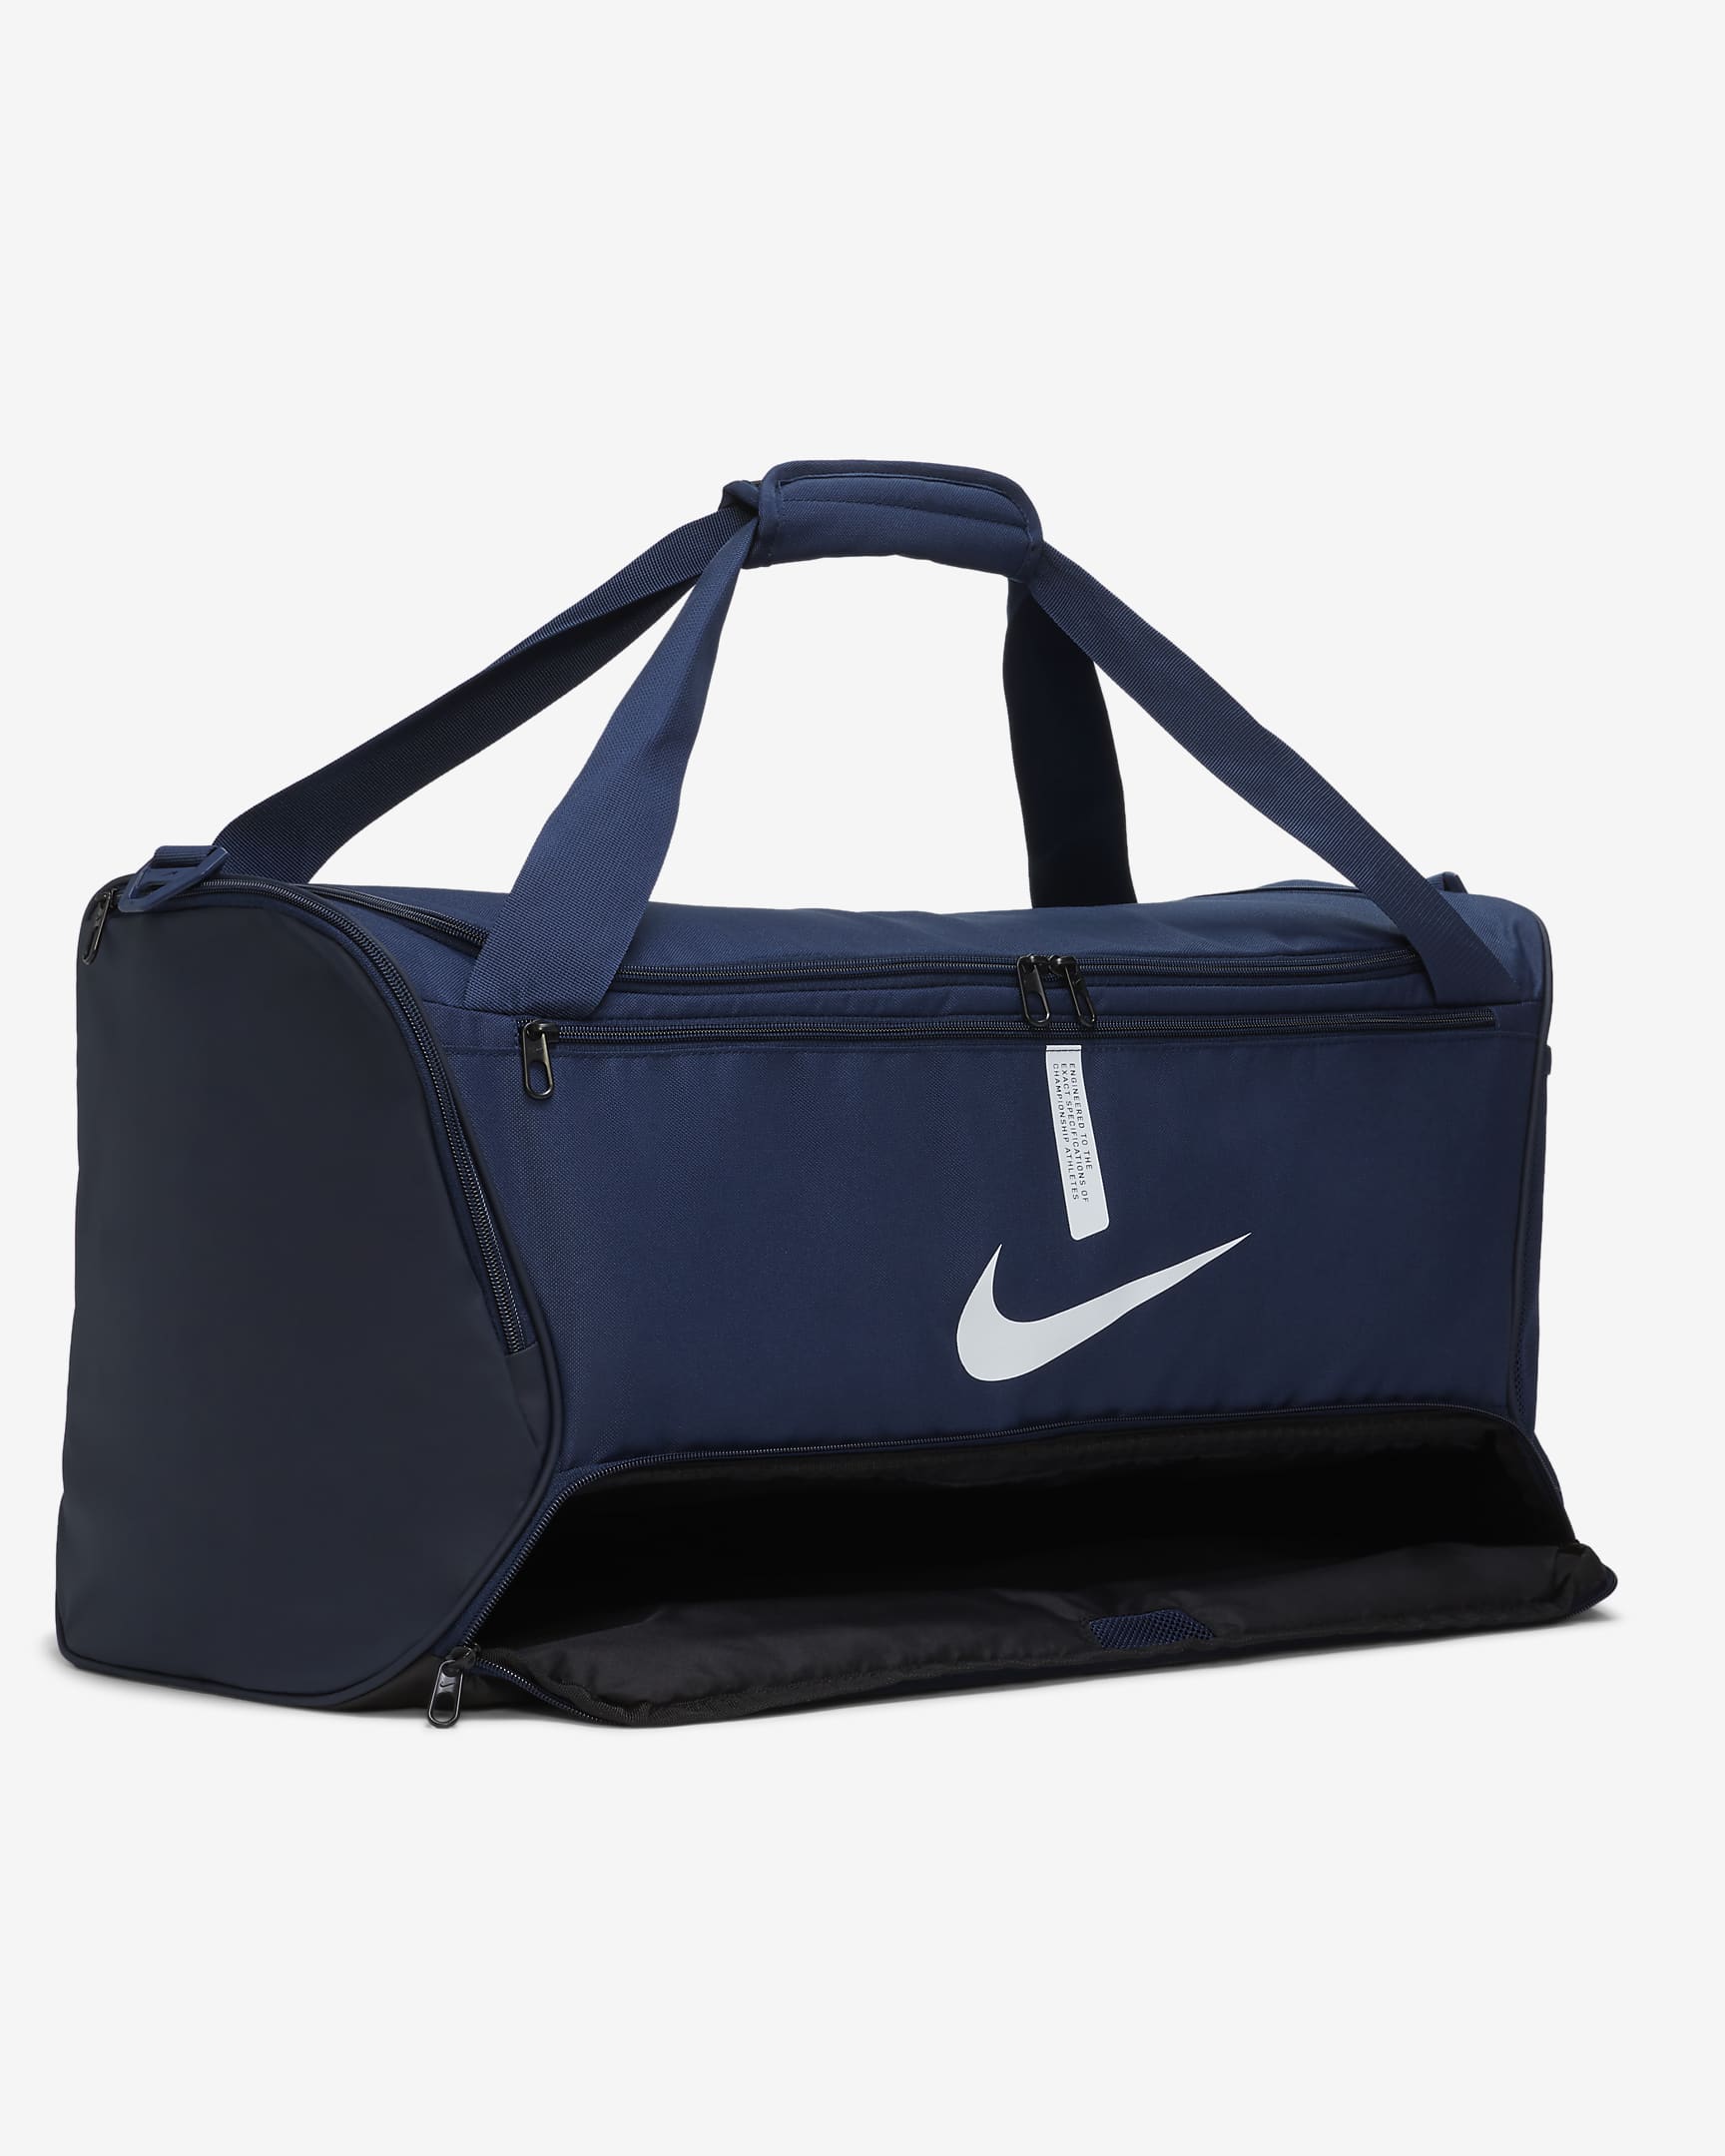 Nike Academy Team Football Duffel Bag (Medium, 60L) - Midnight Navy/Black/White